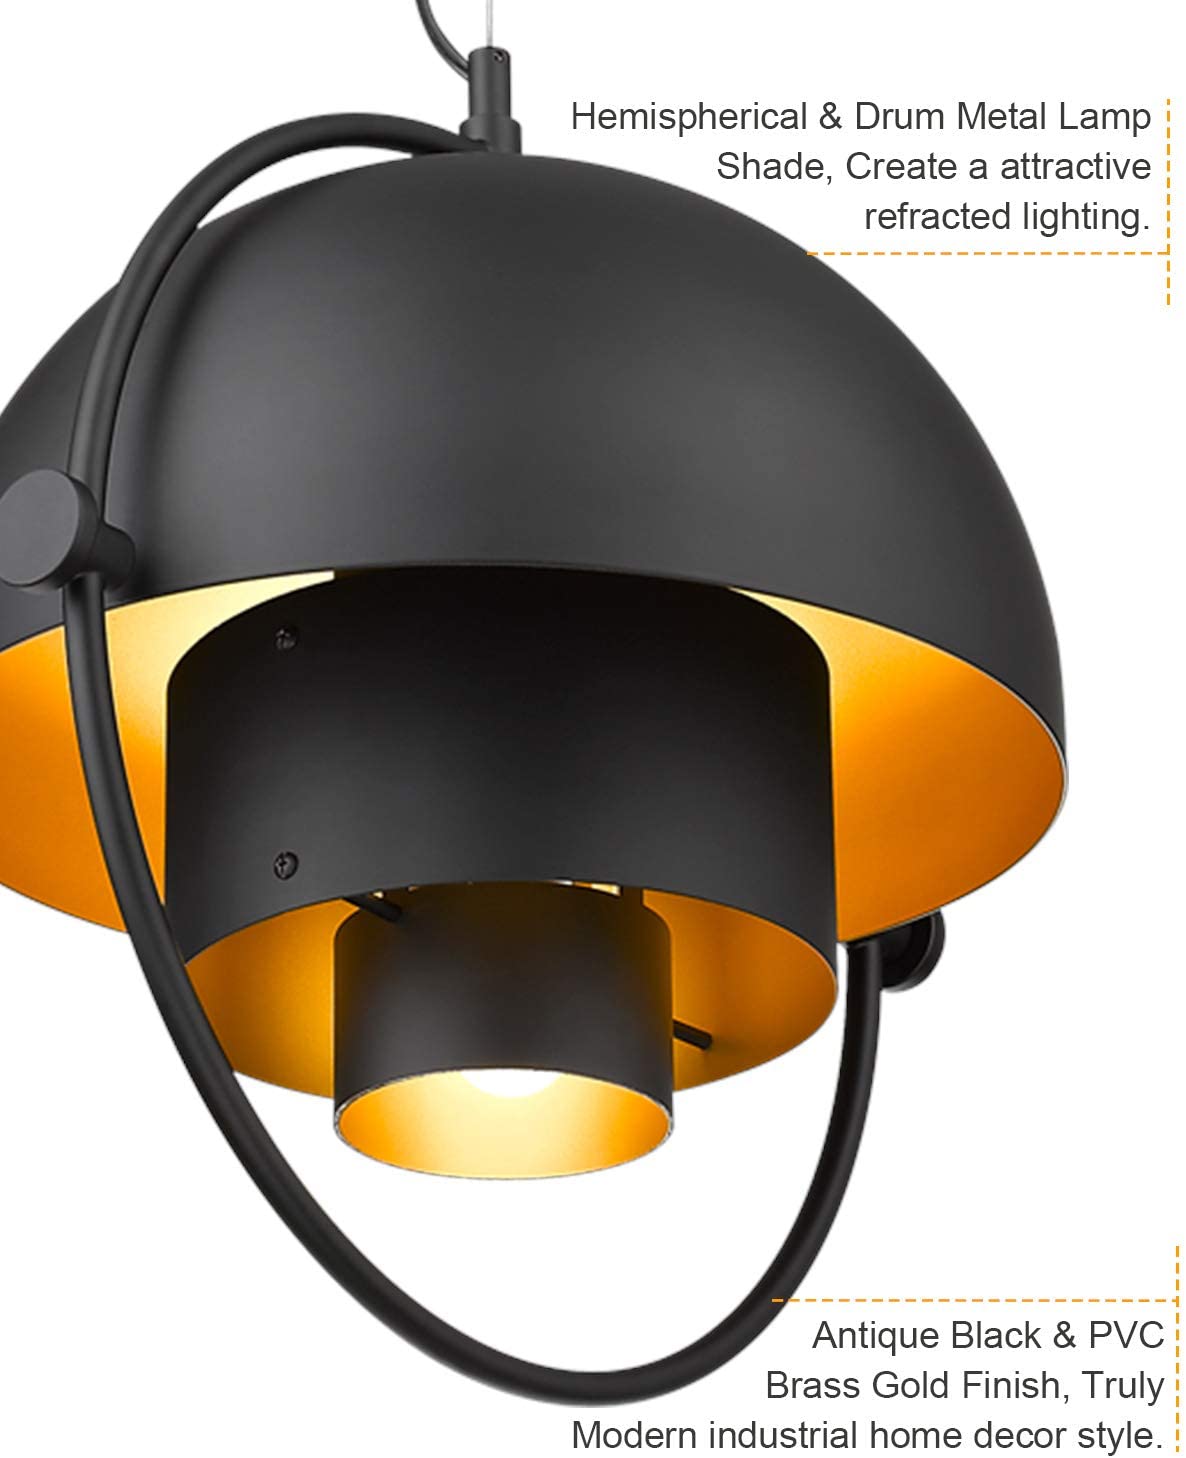 Globe black pendant light with metal lamp shade adjustable hanging light fixture